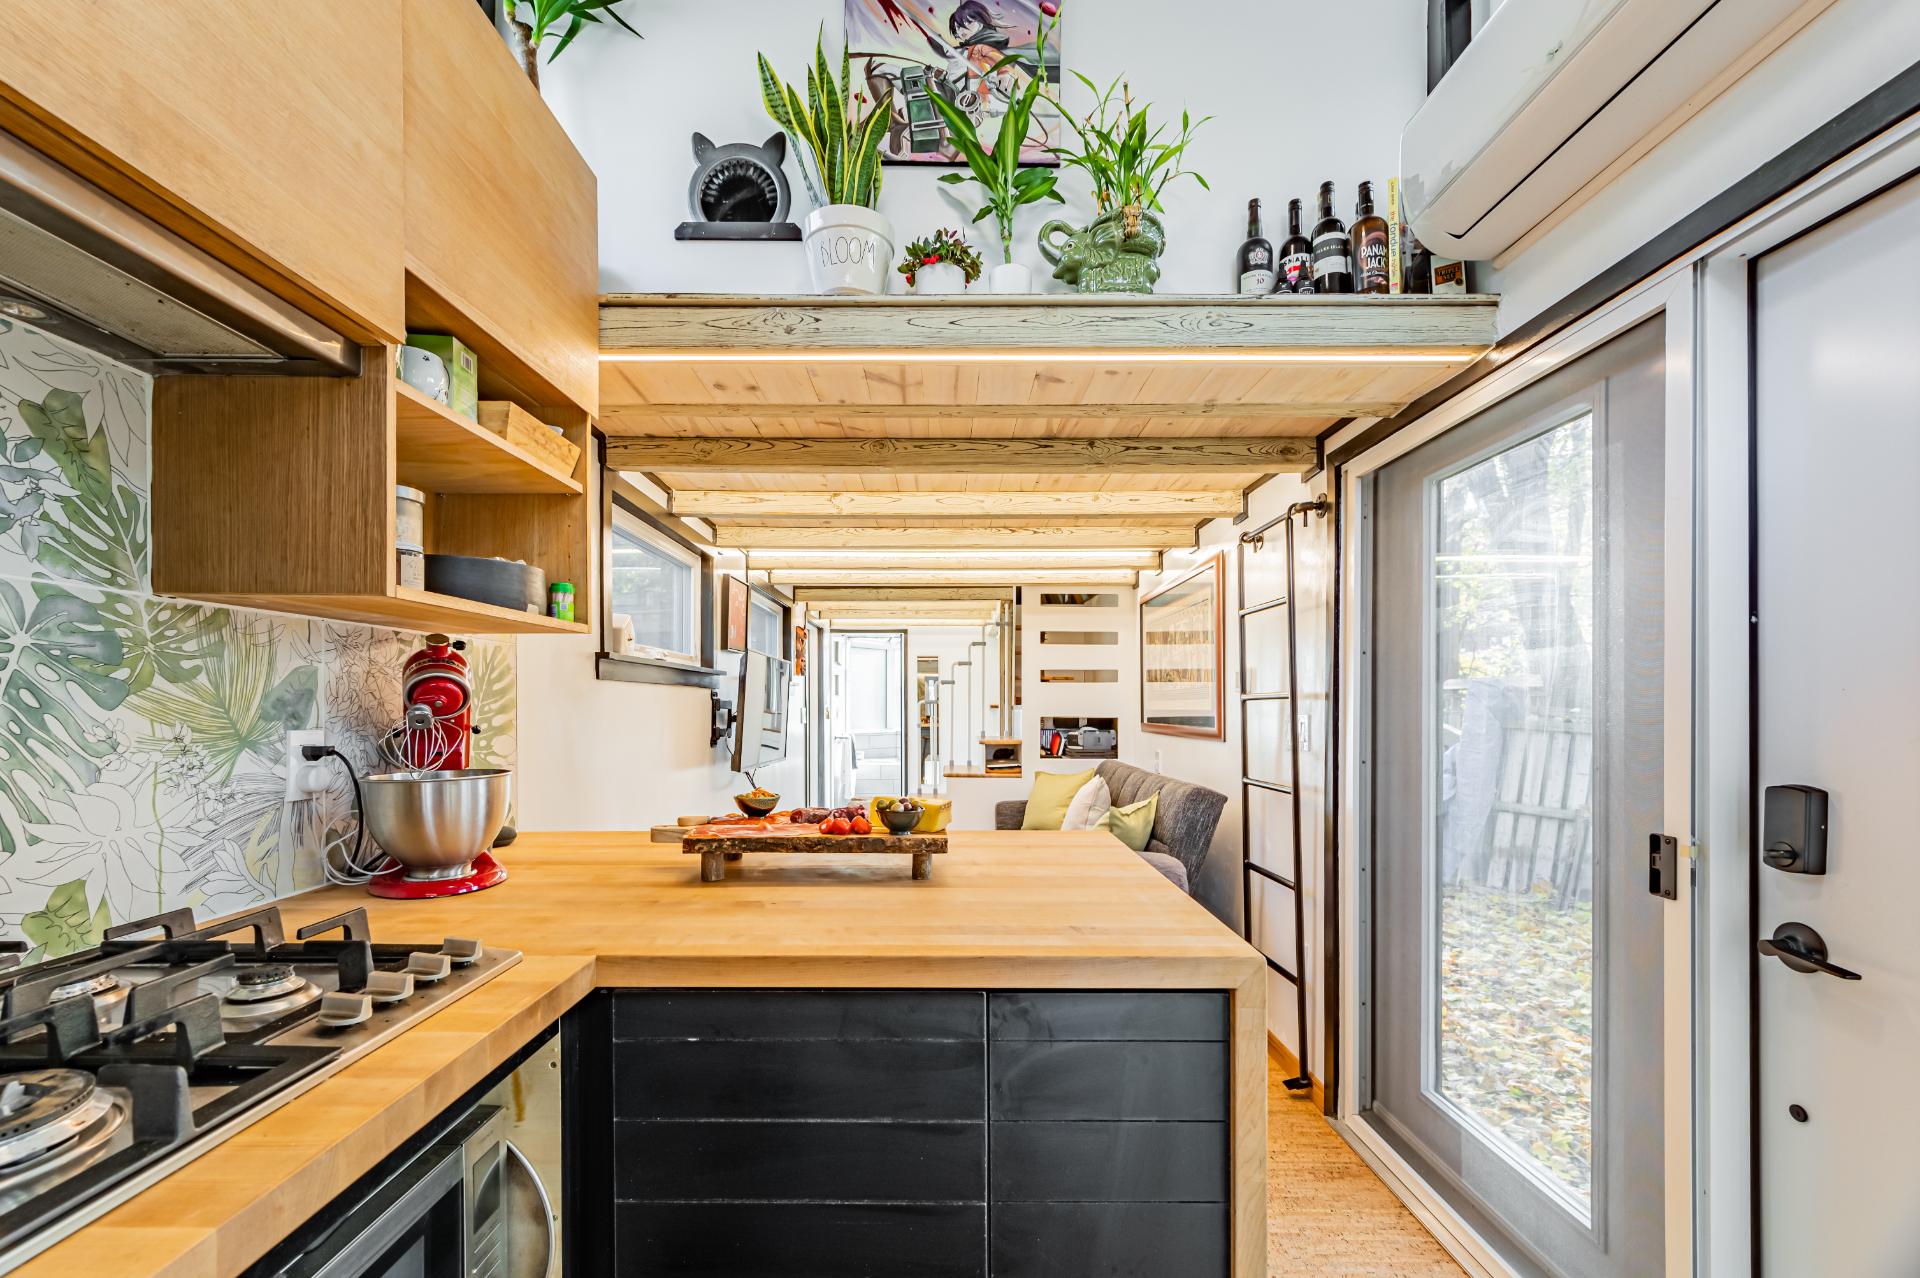 Kitchen - Domek by Acorn Tiny Homes